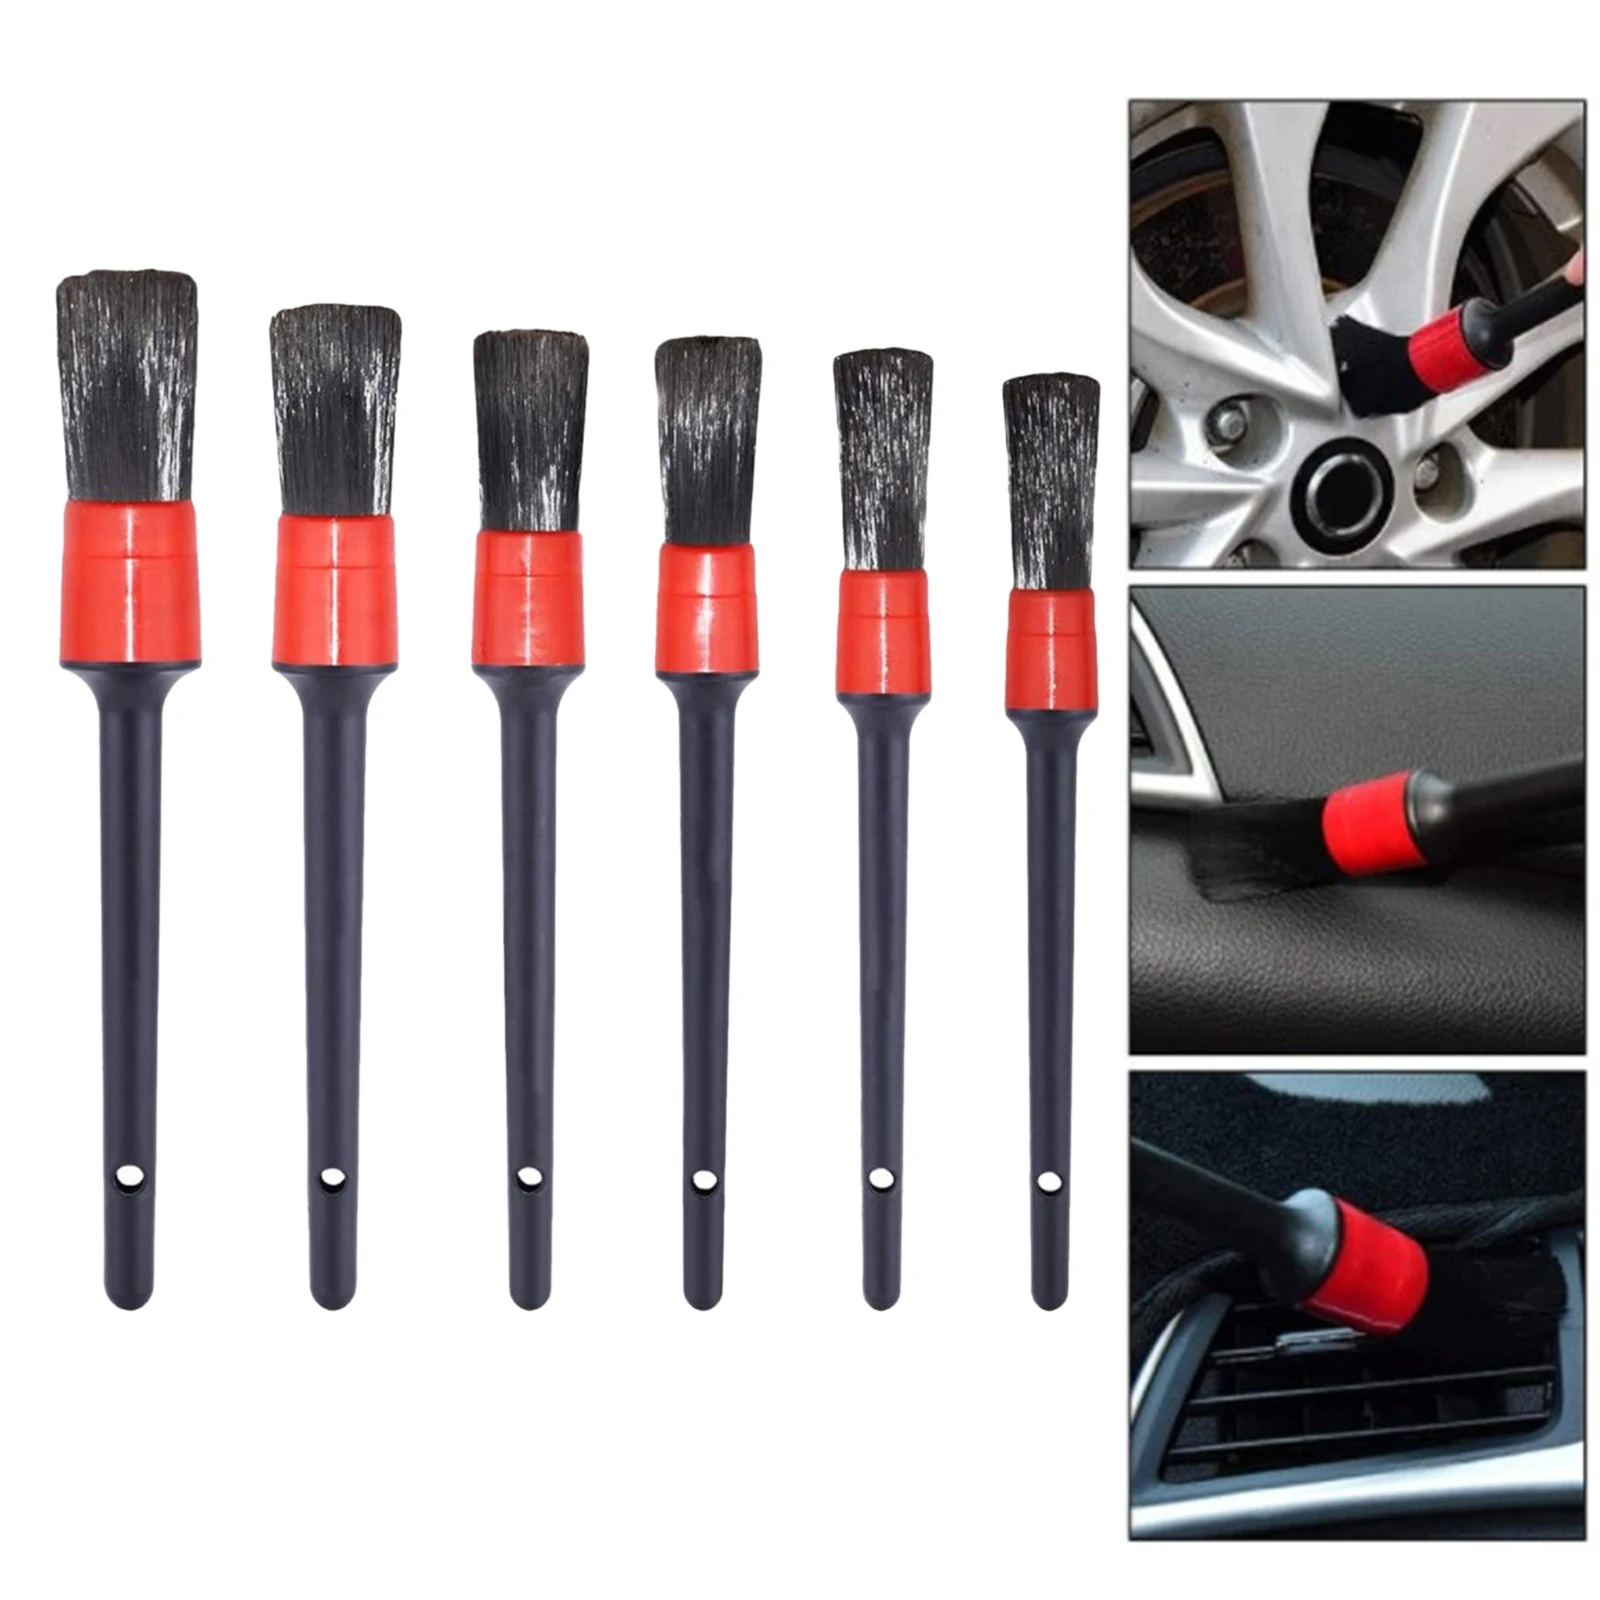 Car Detail Brushes - Set of 6- Perfect for WashingInterior Upholstery